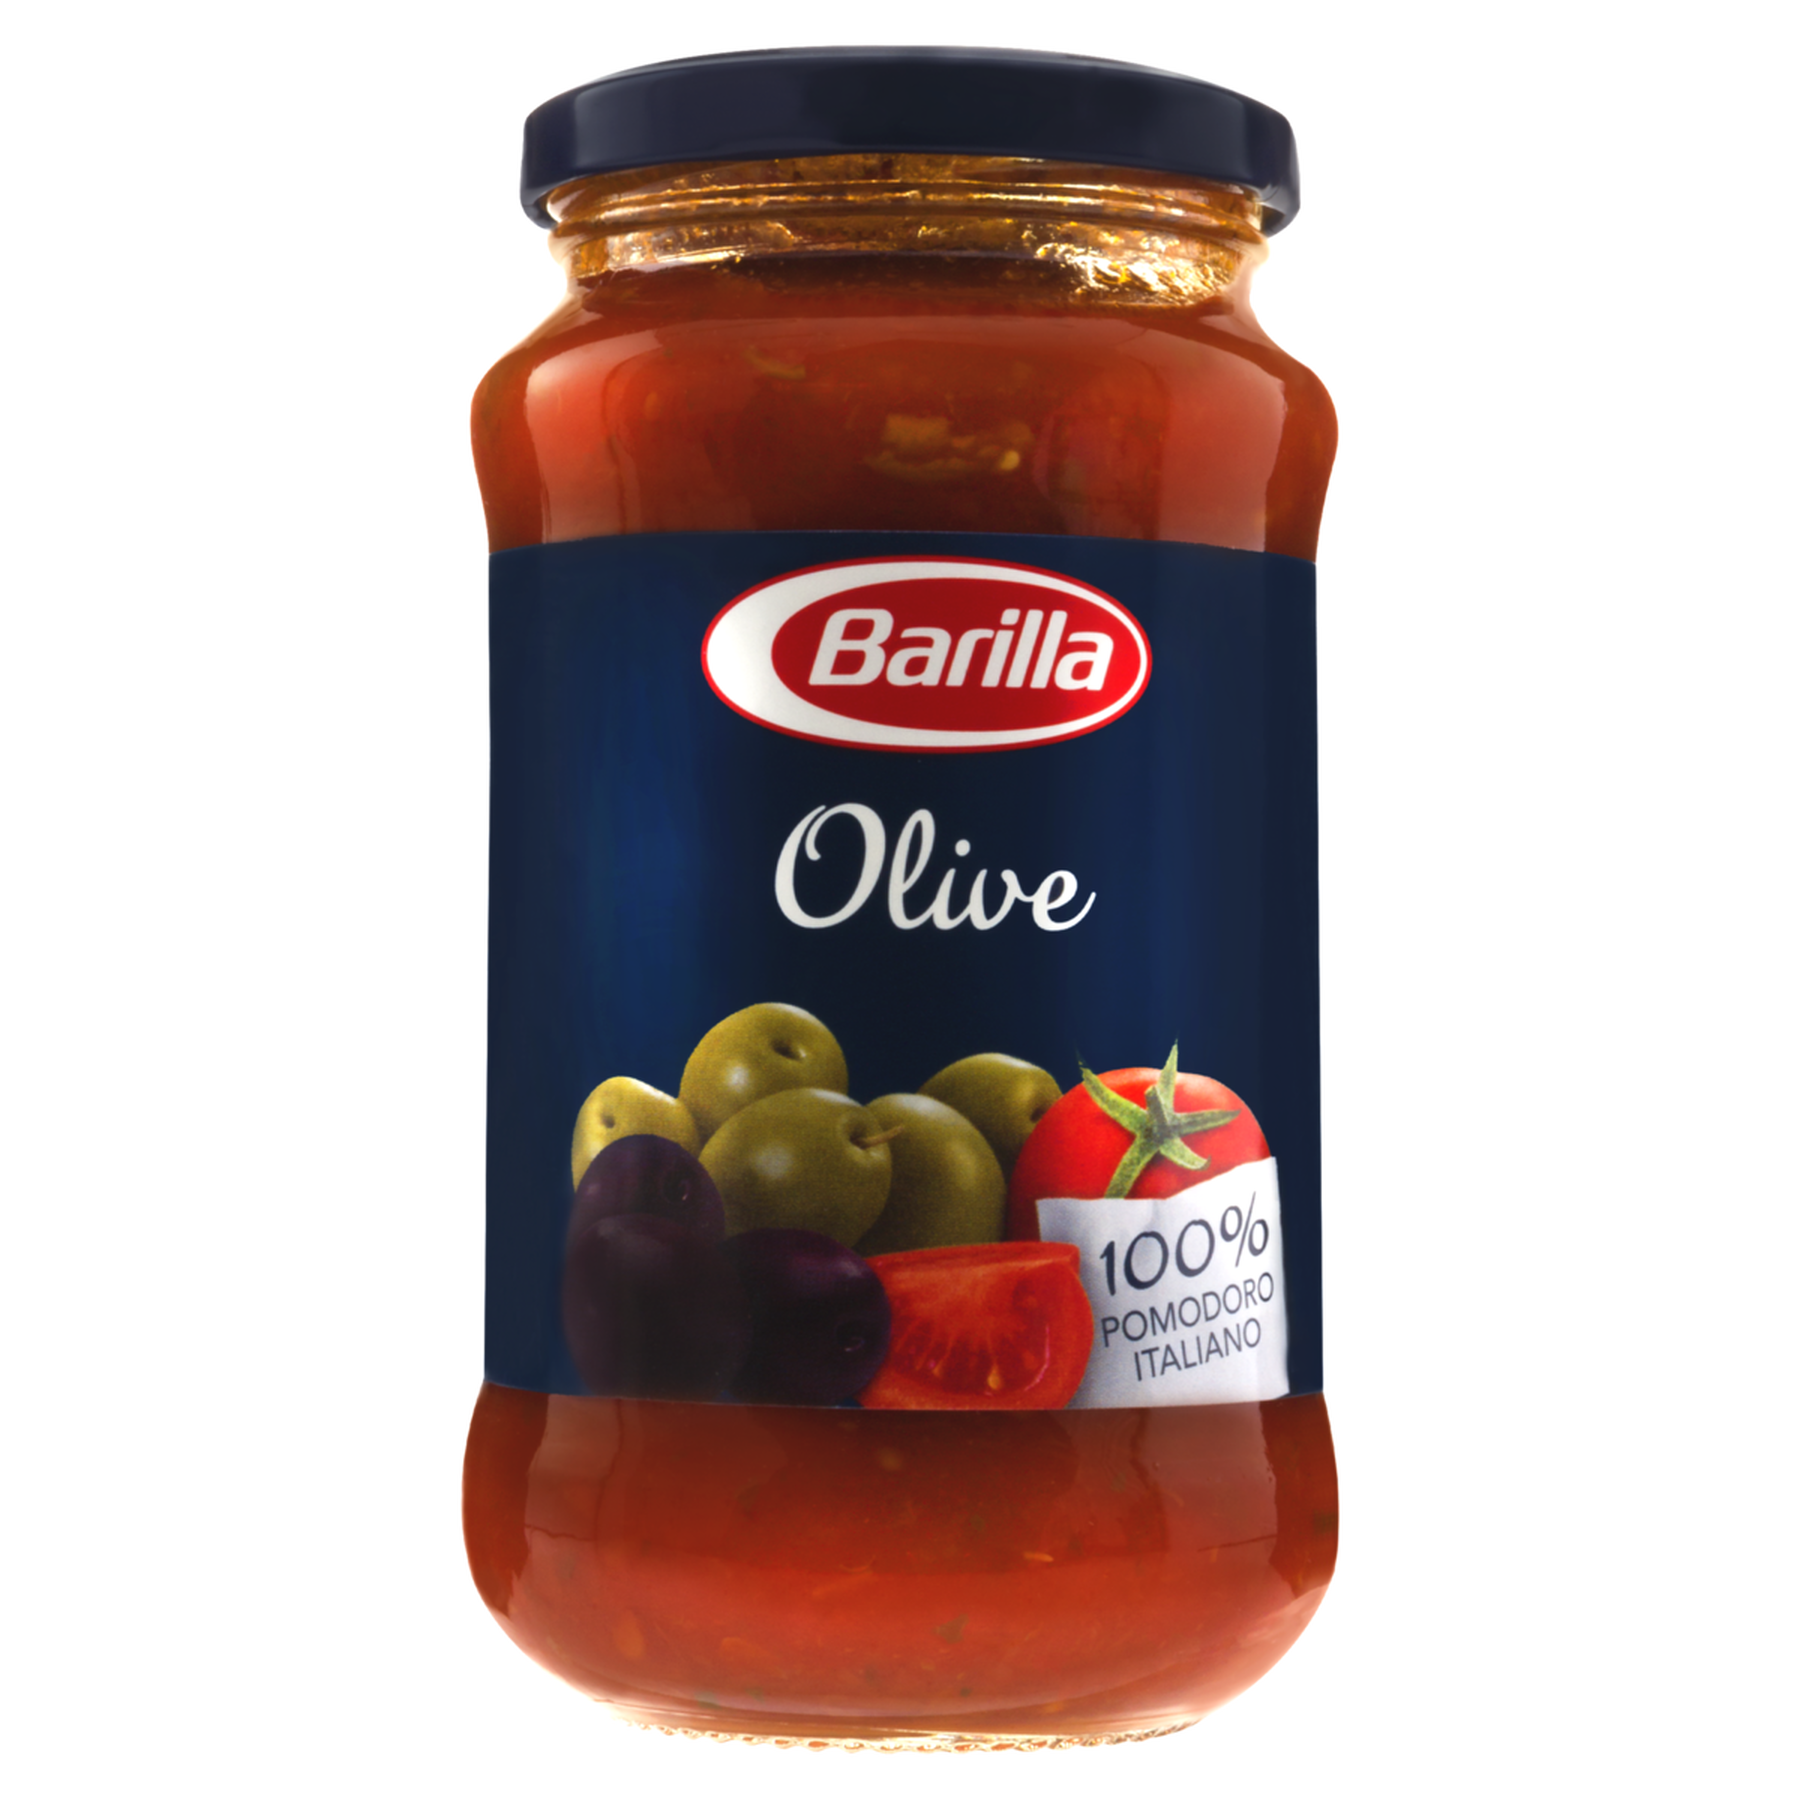 Molho de Tomate Olive Barilla Vidro 400g